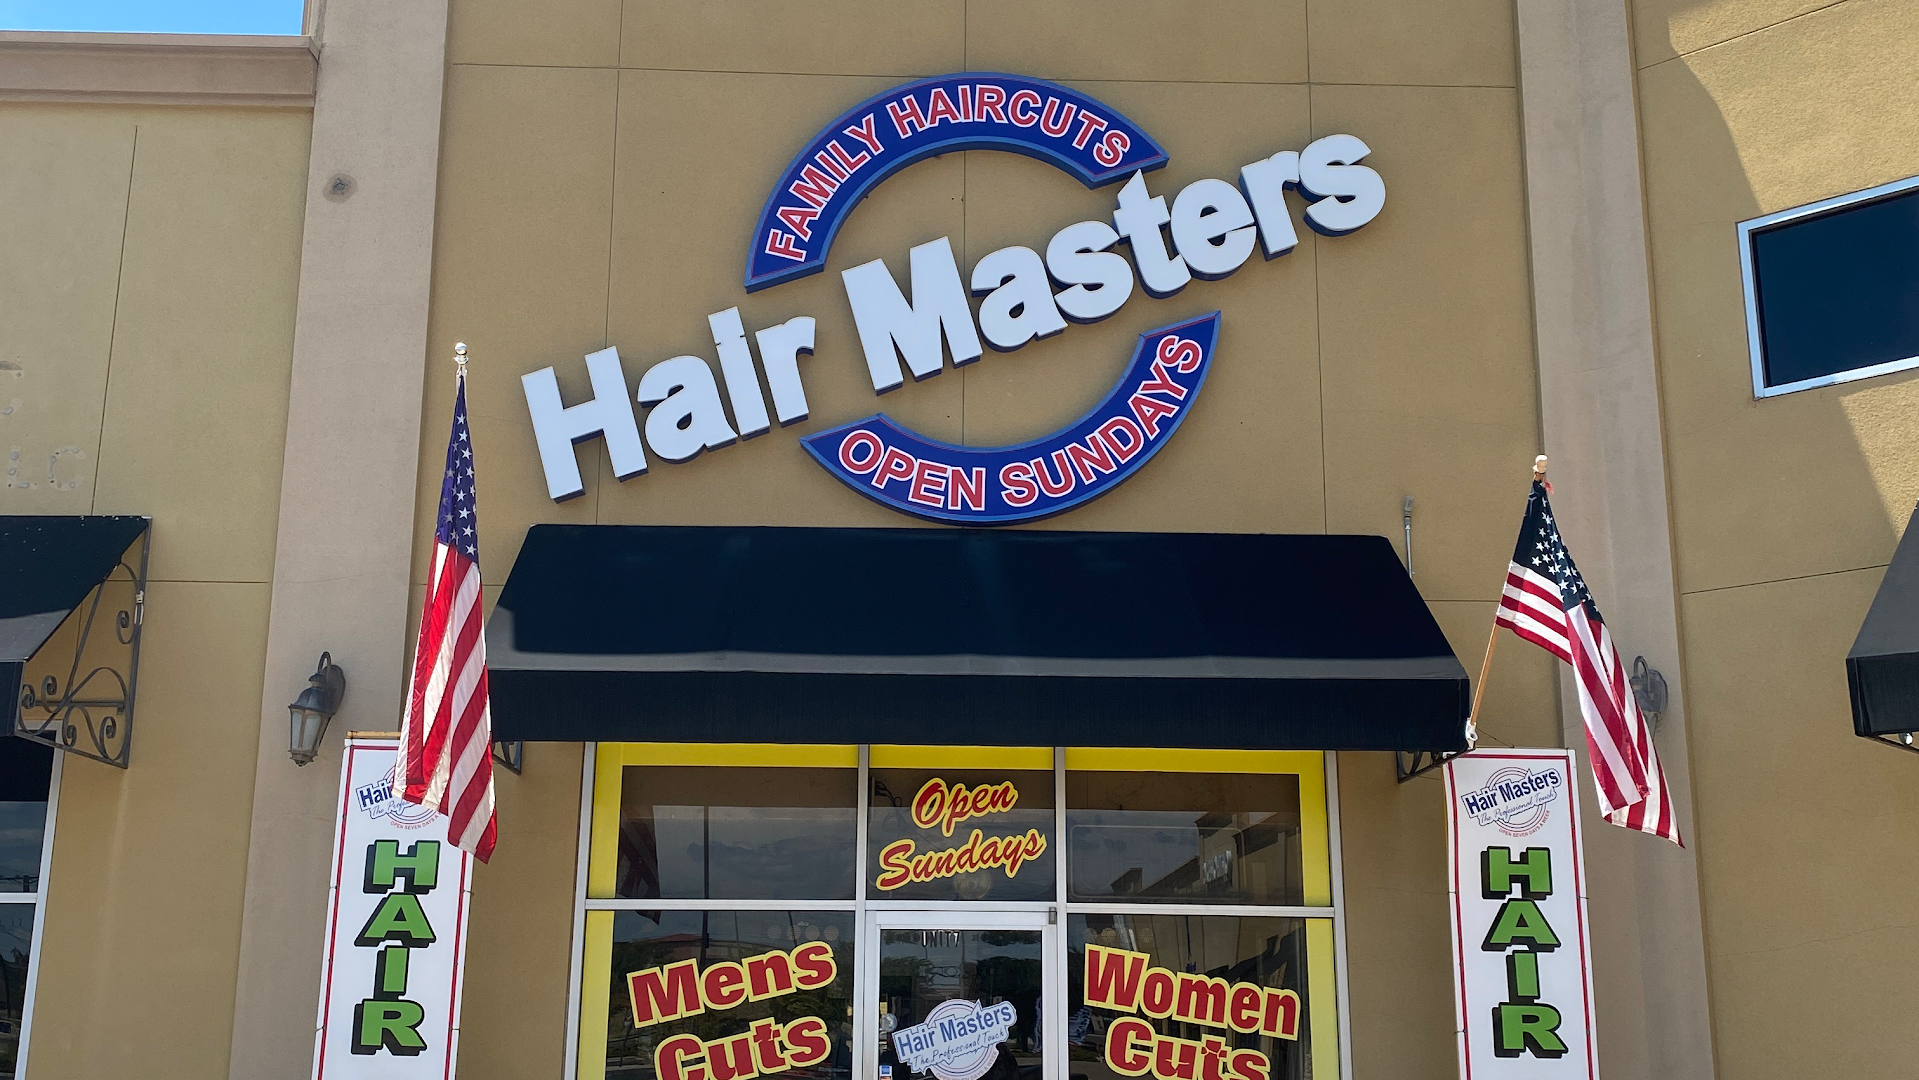 Hair masters